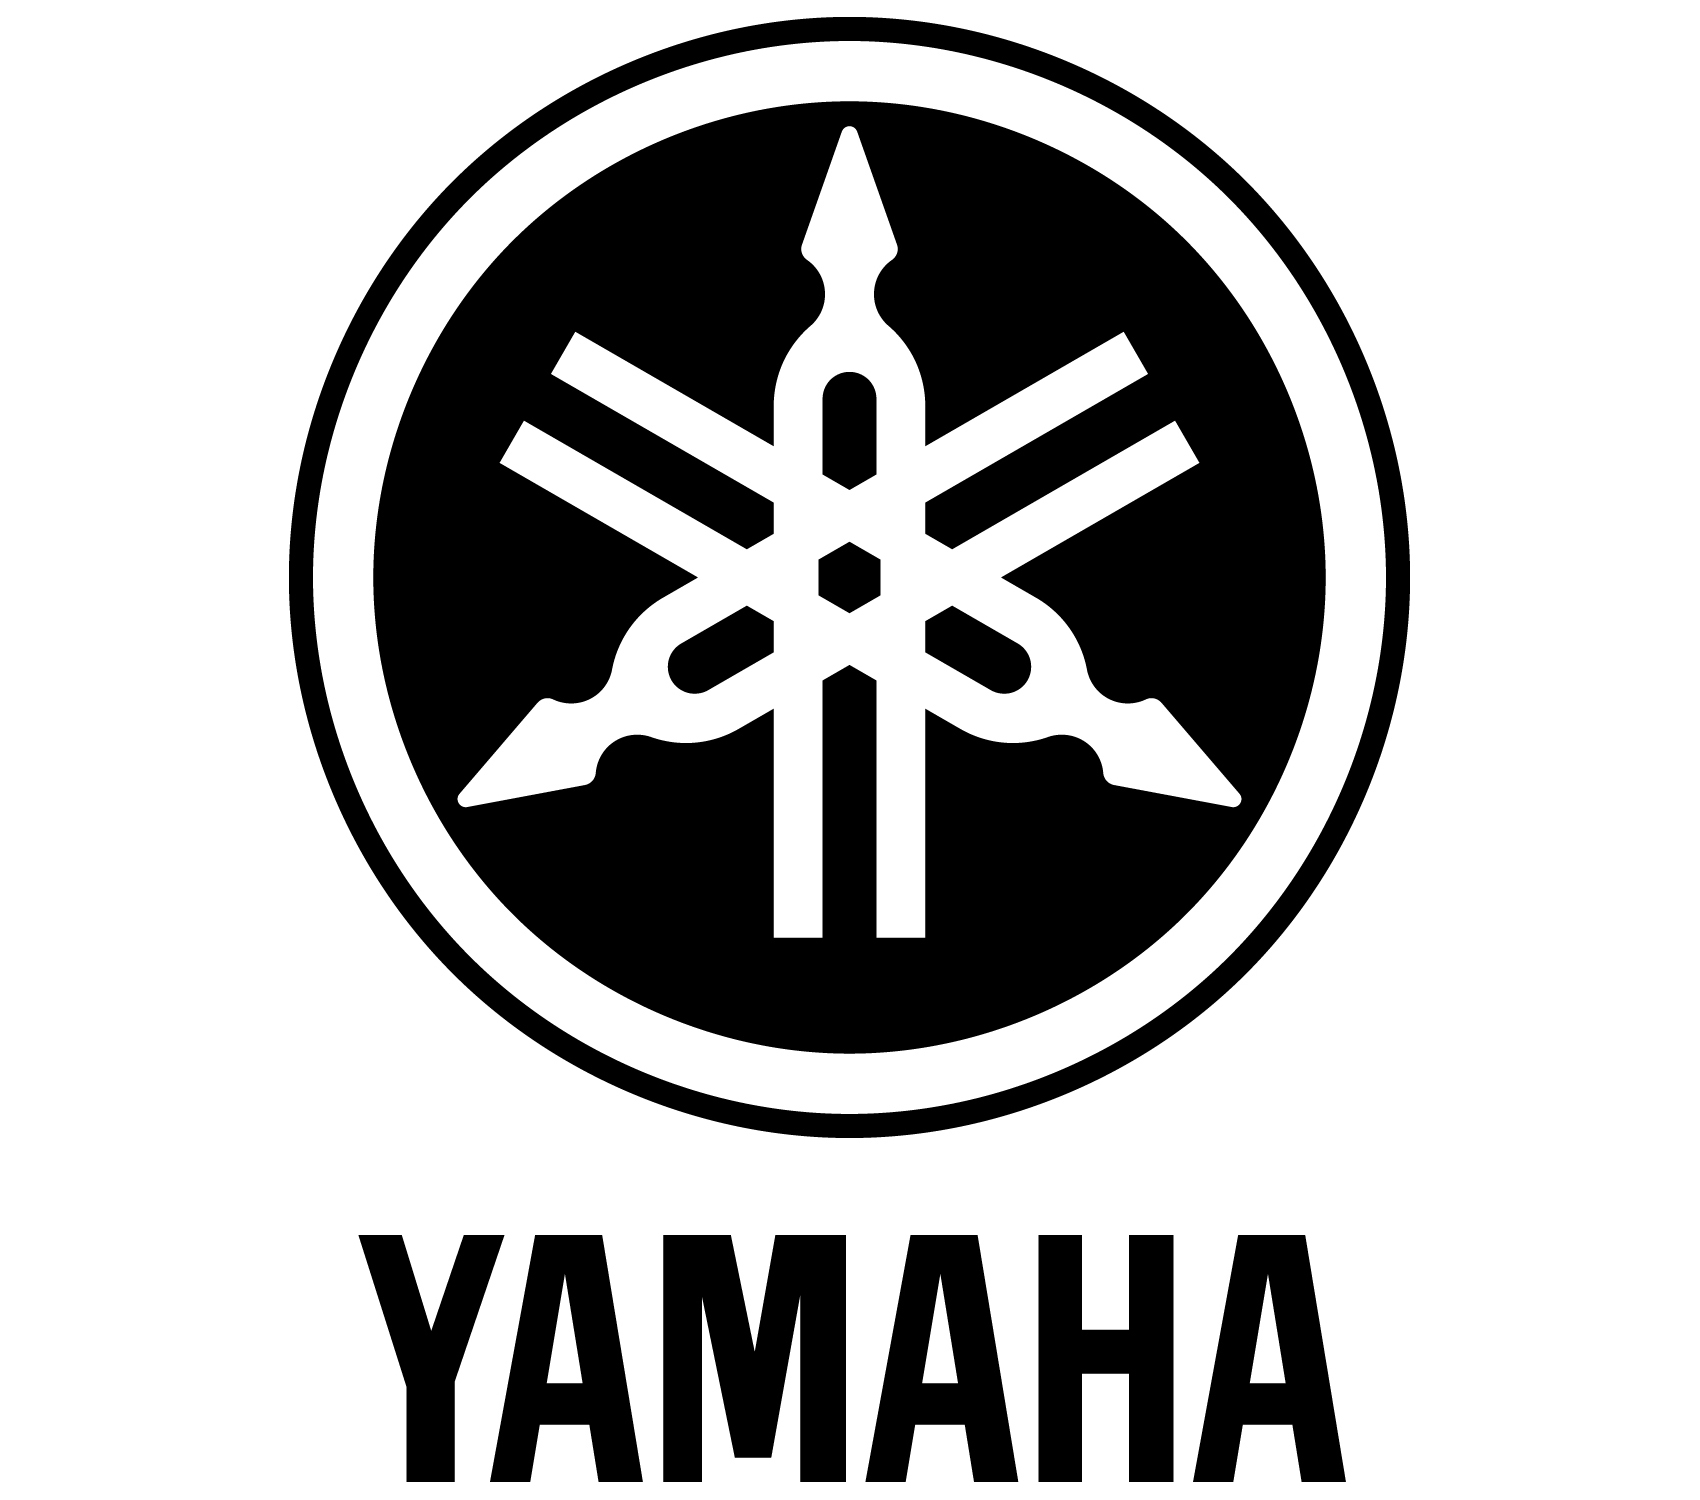 Yamaha logo : histoire, signification et évolution, symbole